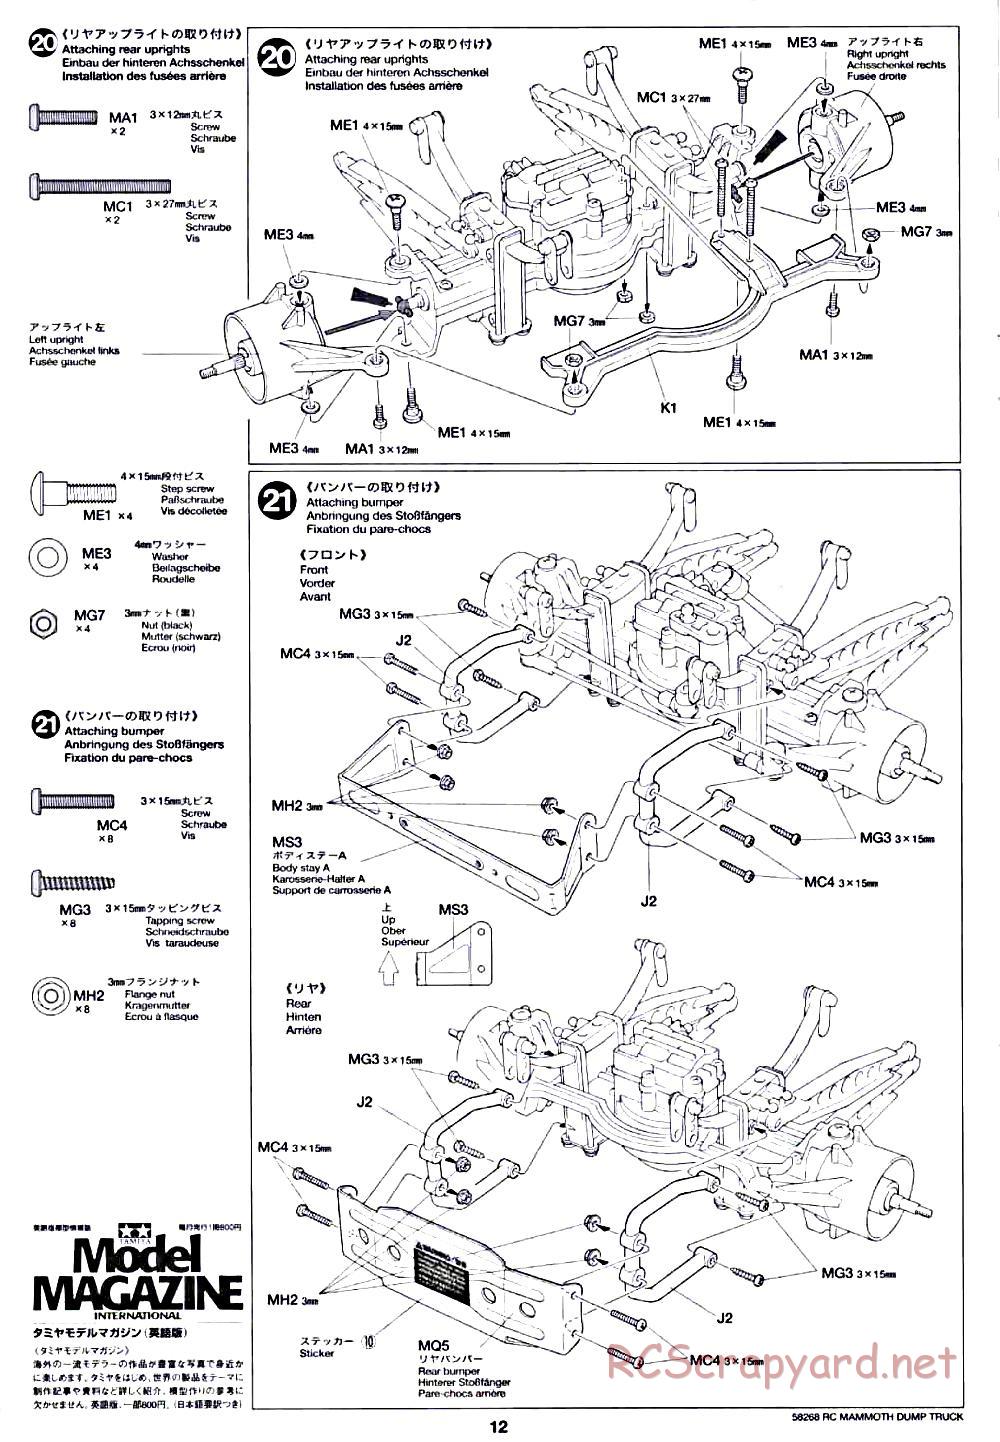 Tamiya - Mammoth Dump Truck Chassis - Manual - Page 12